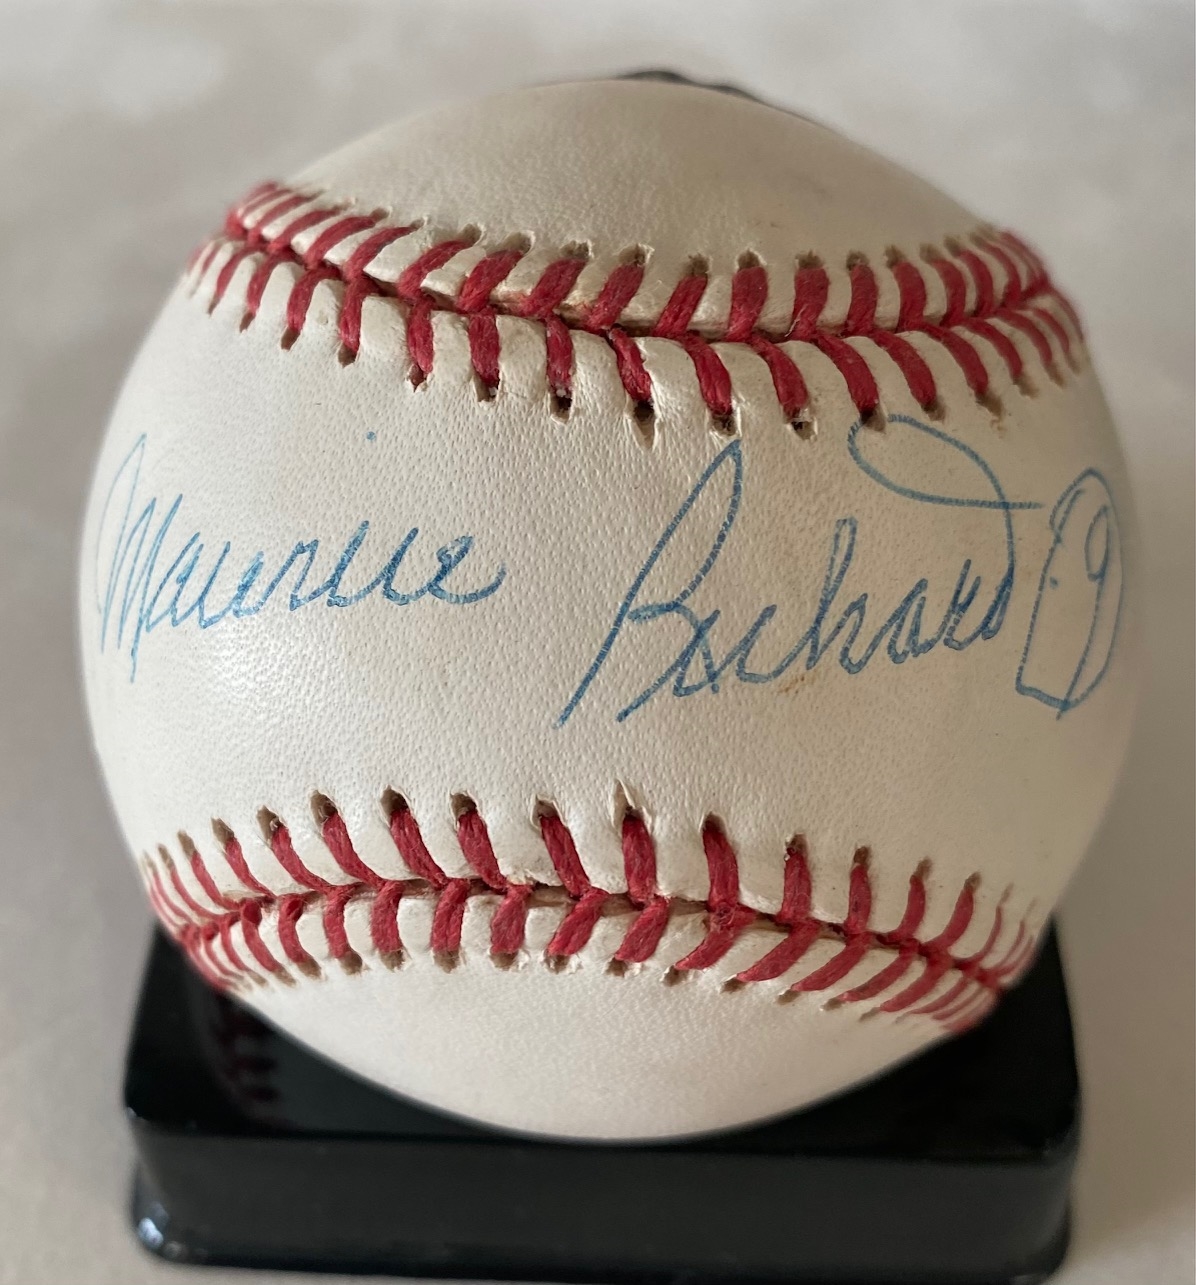 Maurice Richard Signed 1992 Official MLB World Series Baseball